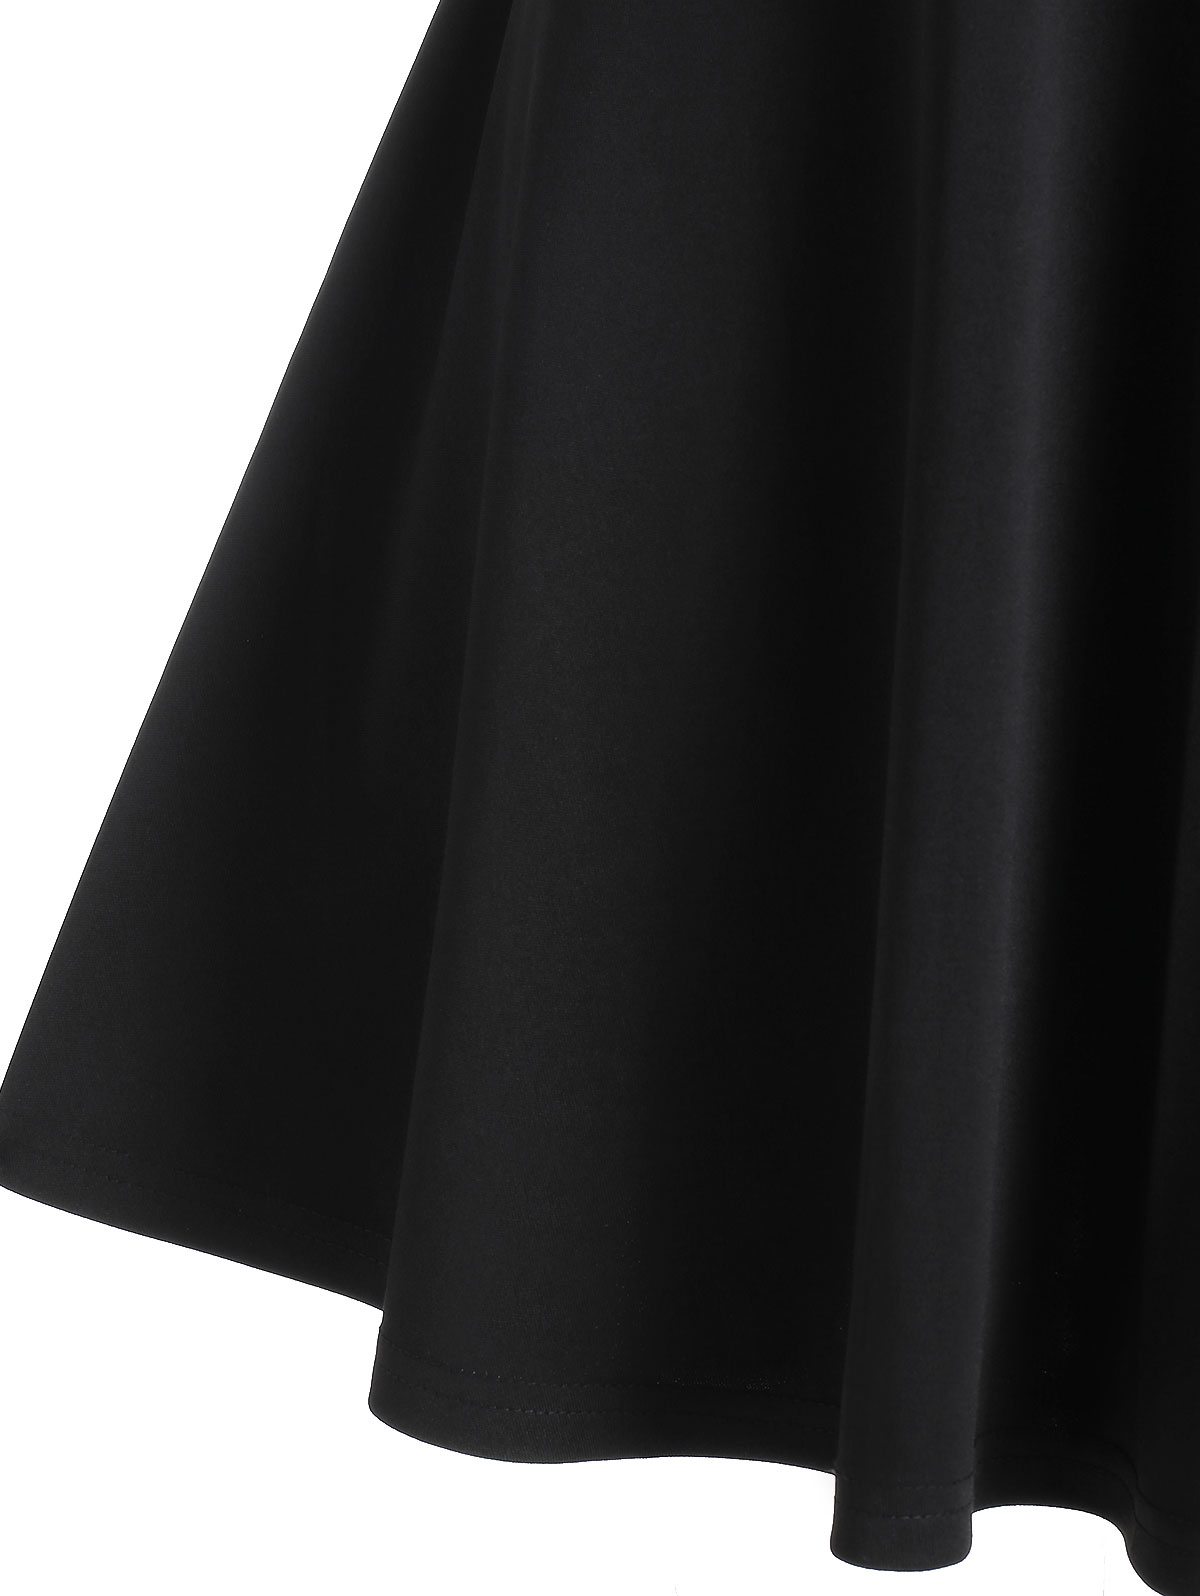 Gothic Plaid Sleeveless Half Zip Dress – Gothic Honey